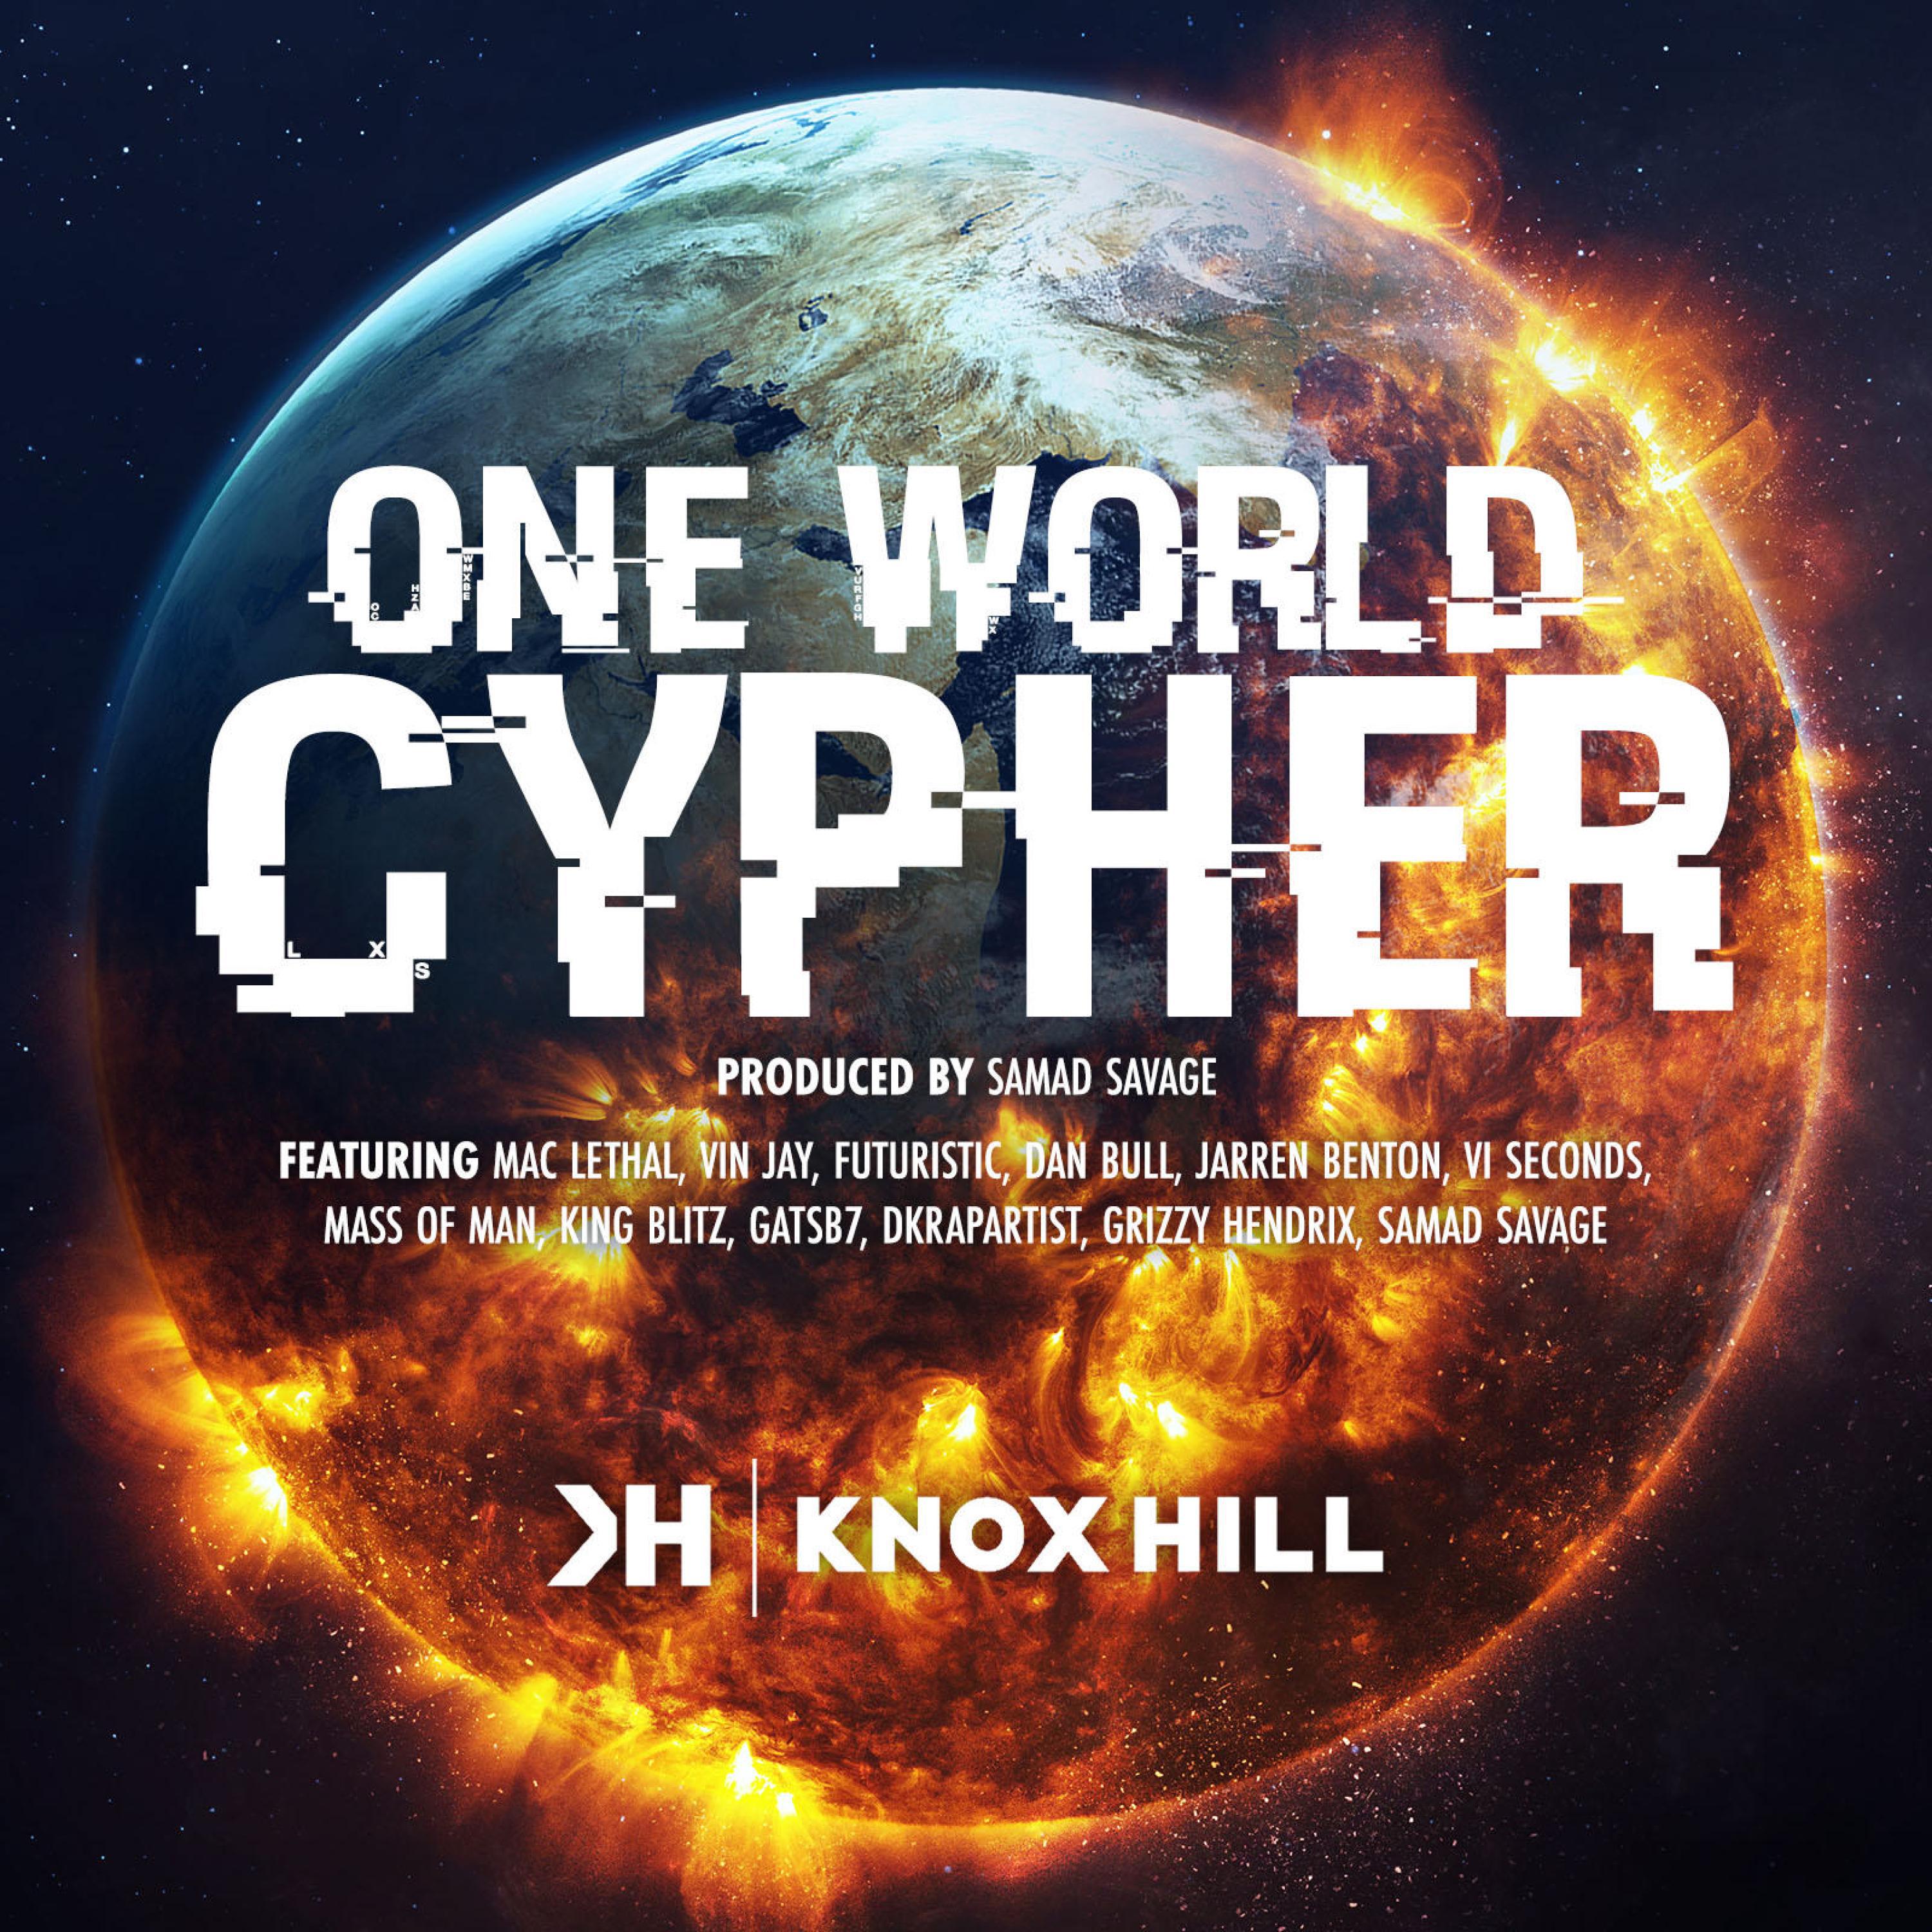 Knox Hill - One World Cypher (feat. Jarren Benton, Dan Bull, Mass Of Man, Mac Lethal, Grizzy Hendrix, VI Seconds, Samad Savage, Gatsb7, Dkrapartist & King Blitz)